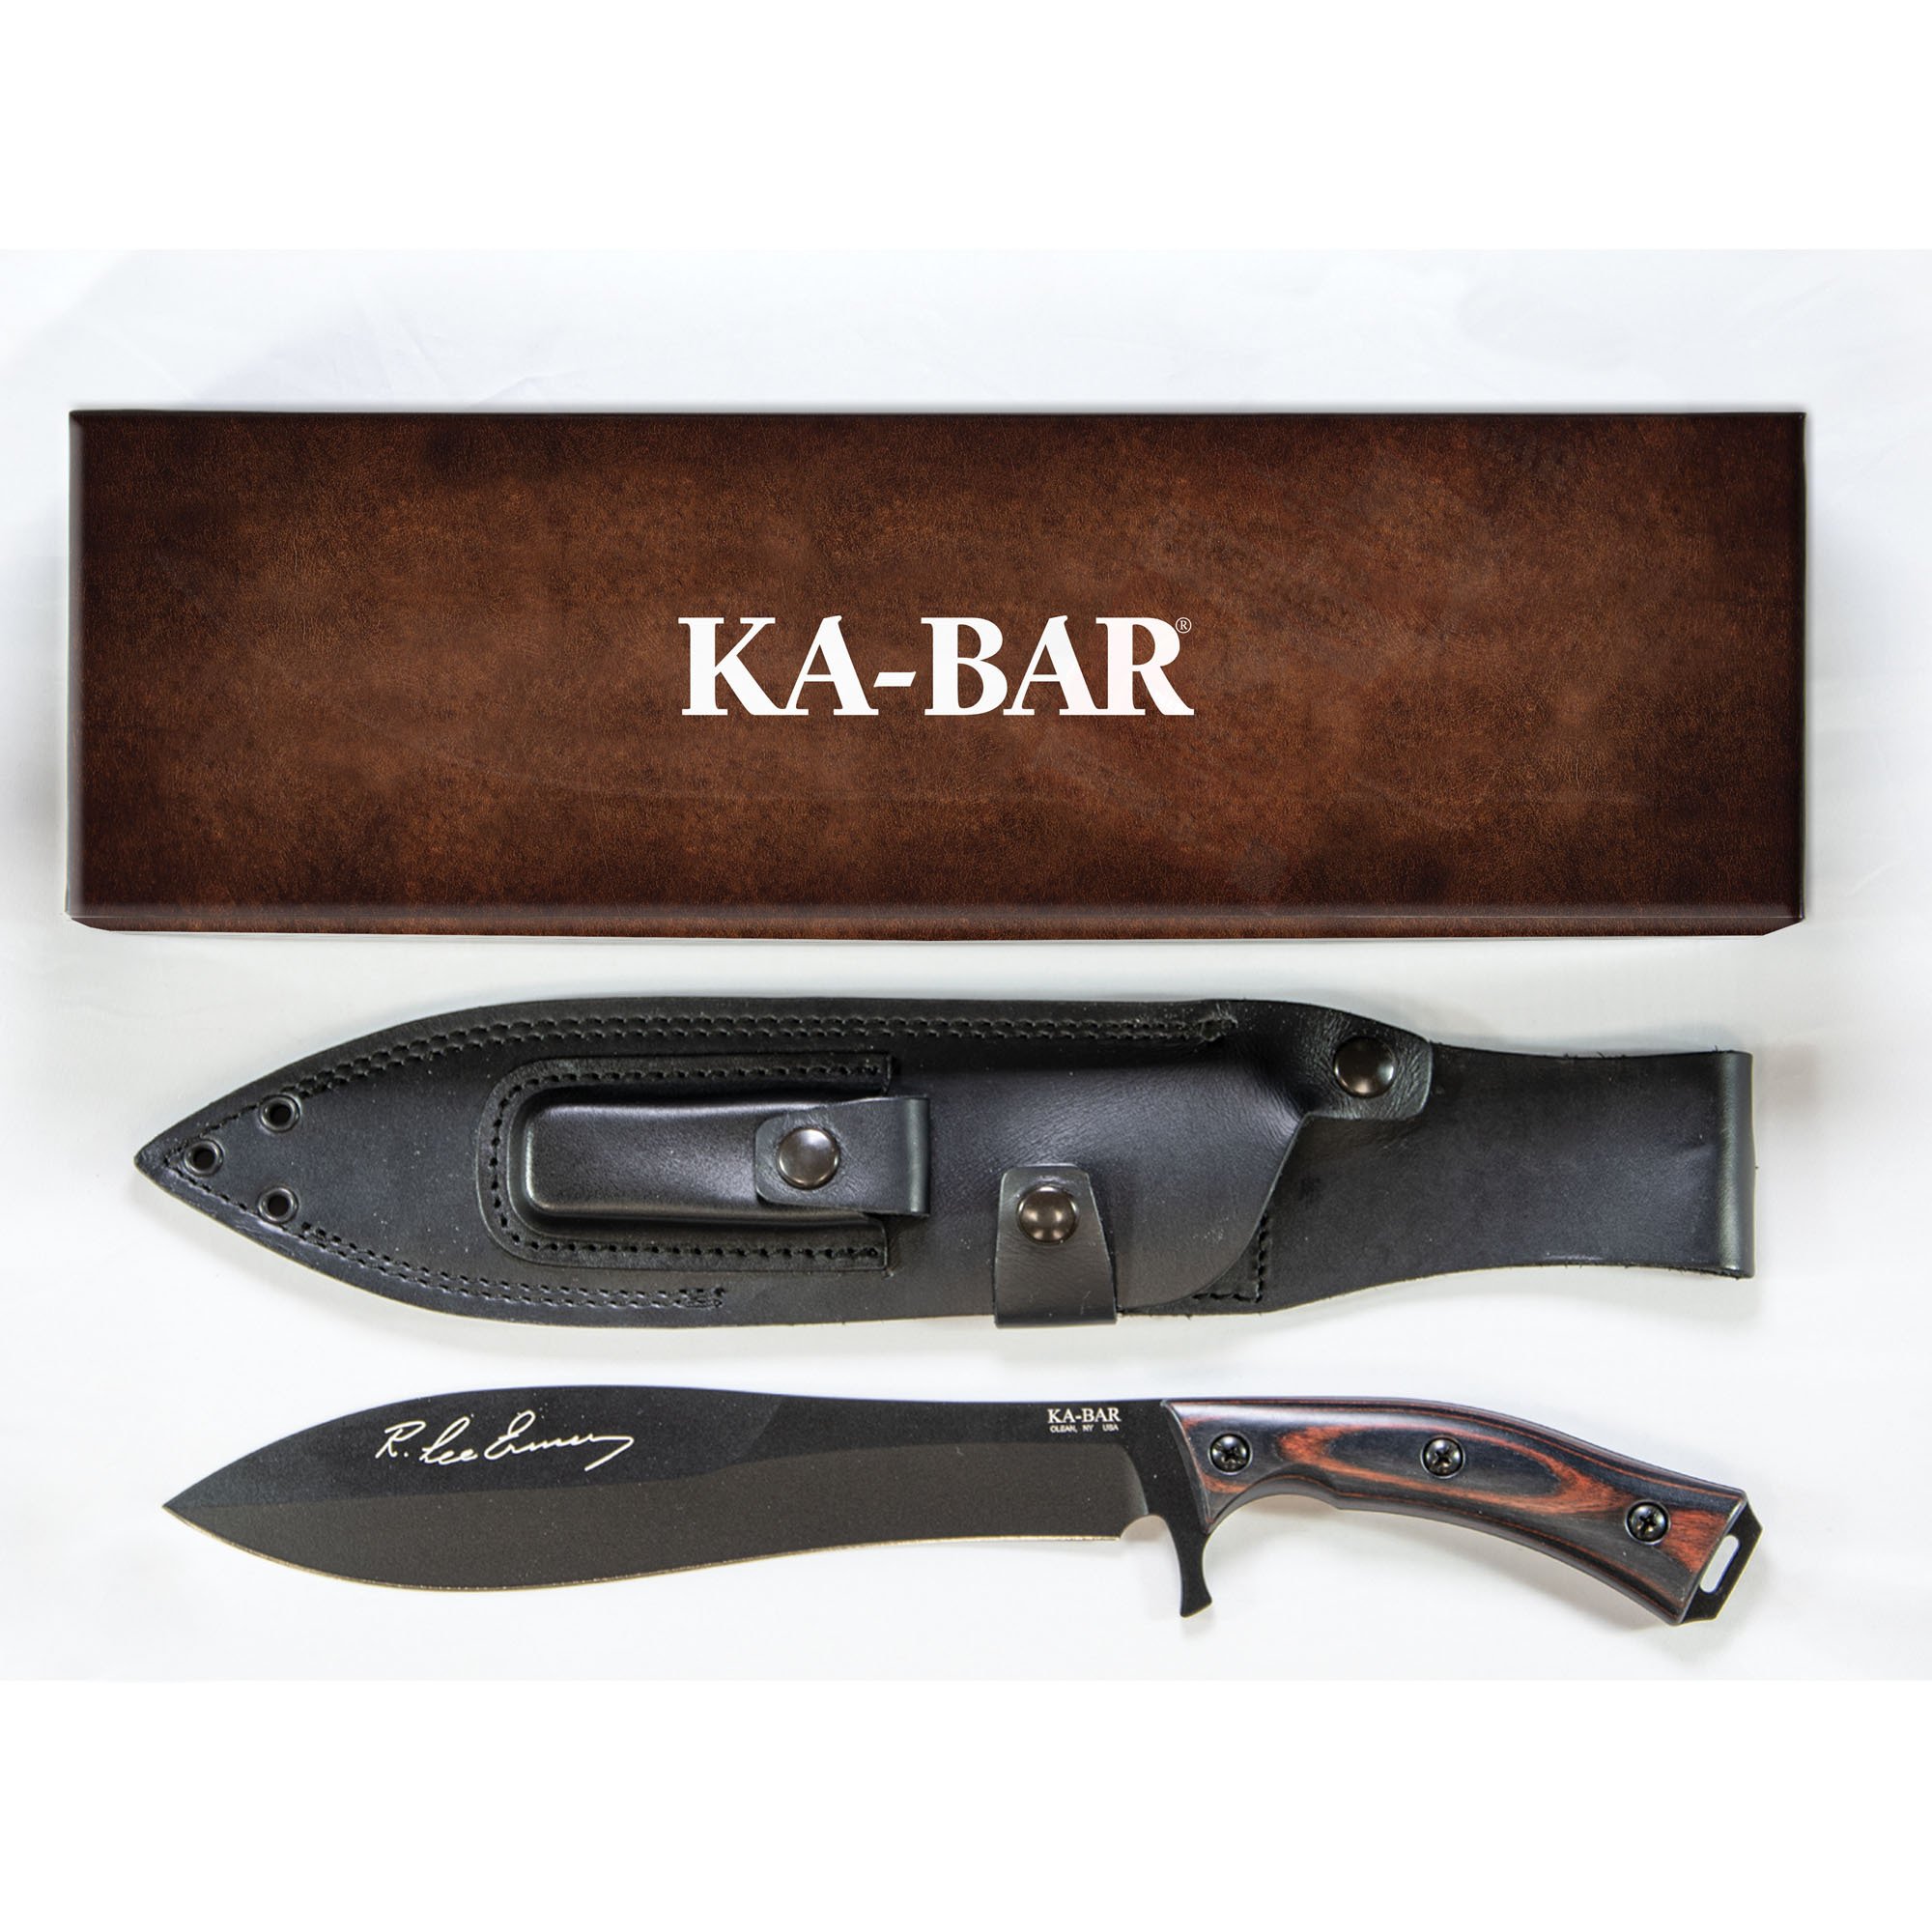 KA-BAR 5300 Gunny Knife with Packaging